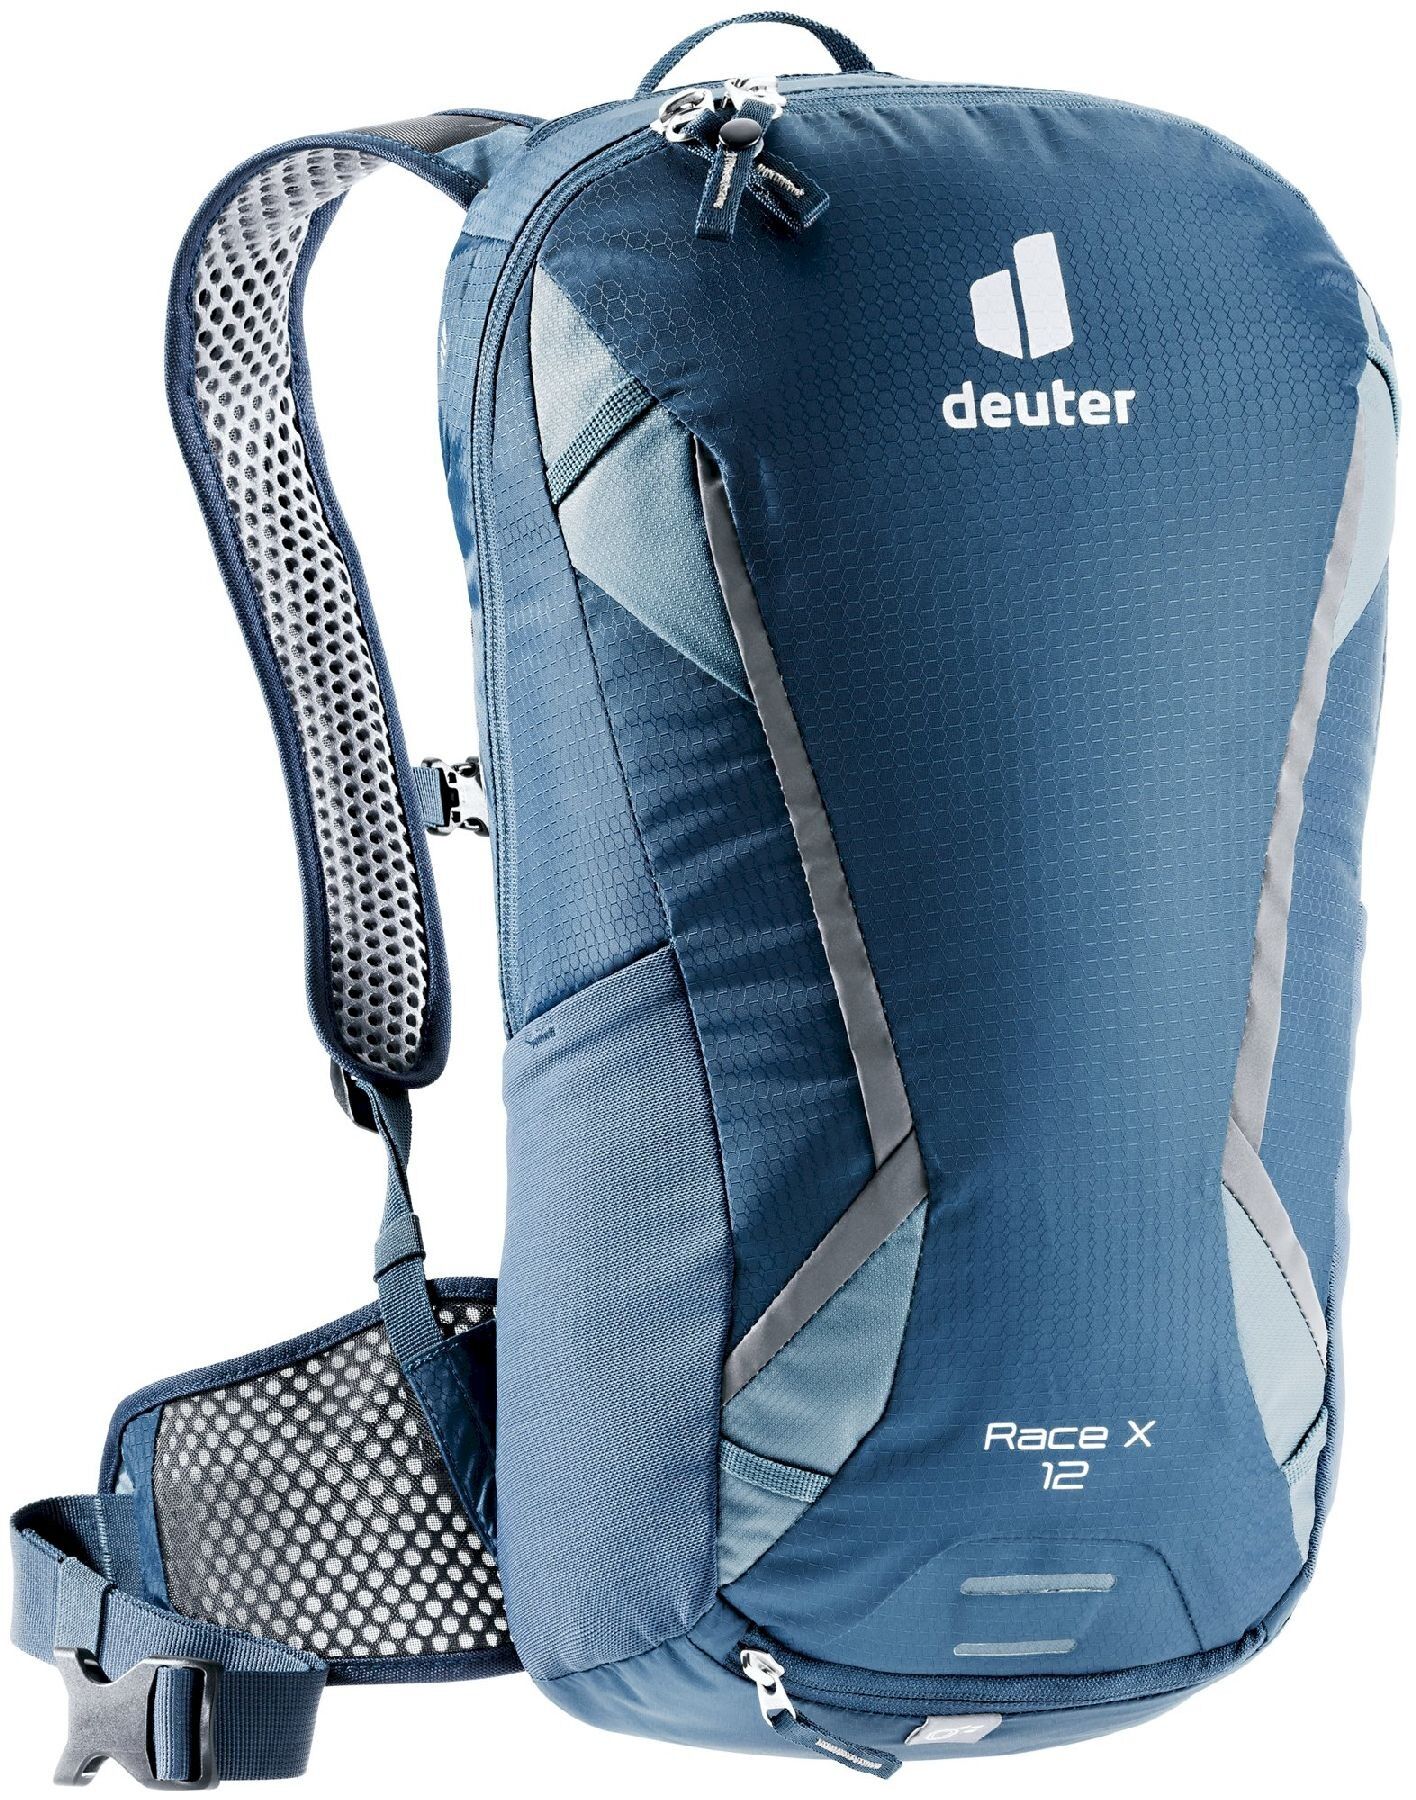 Deuter Race X - Cycling backpack - Men's